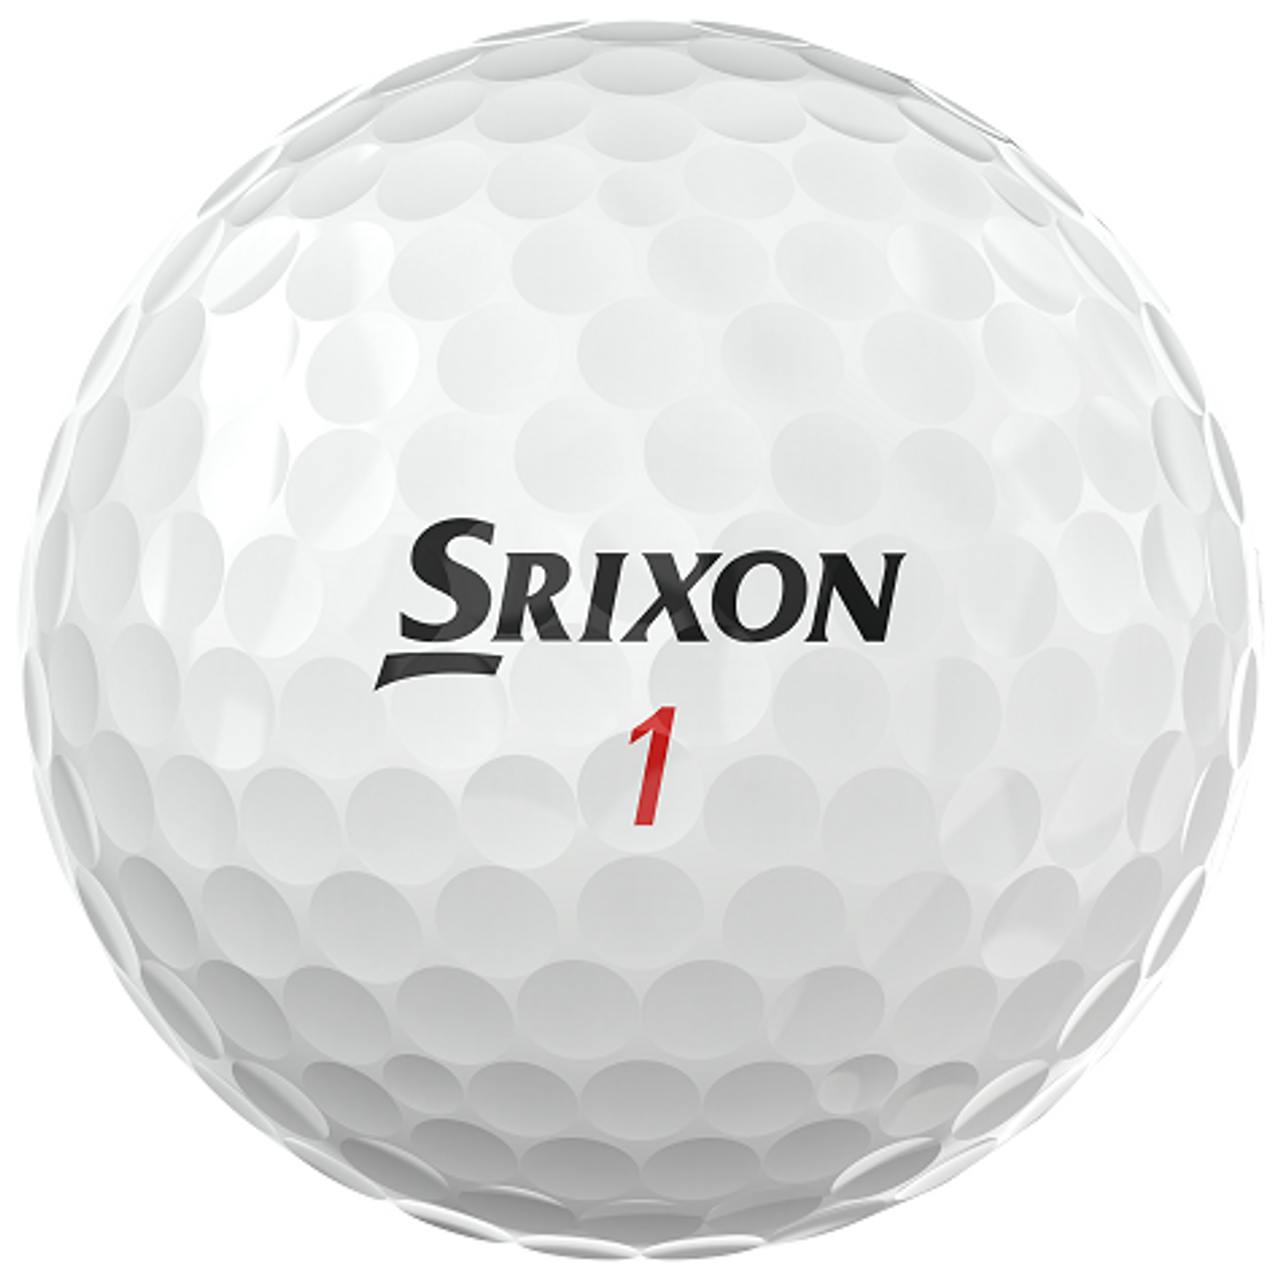 Srixon Z Star XV 7 Golf Balls